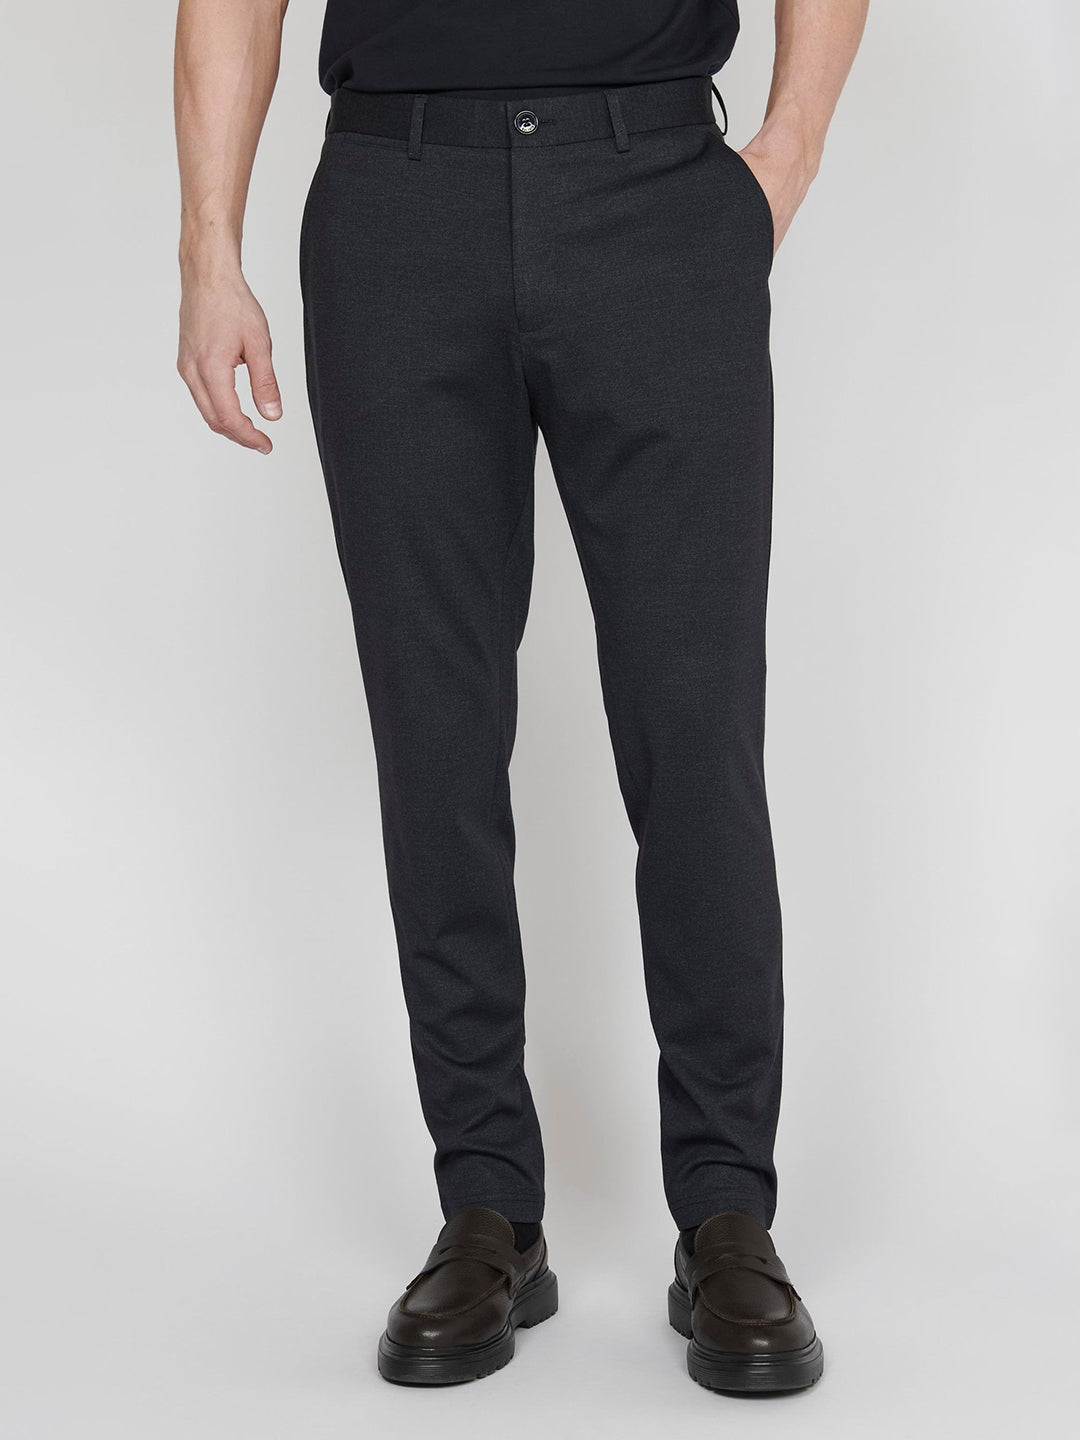 Buy Men Black Solid Regular Fit Trousers Online - 163059 | Peter England